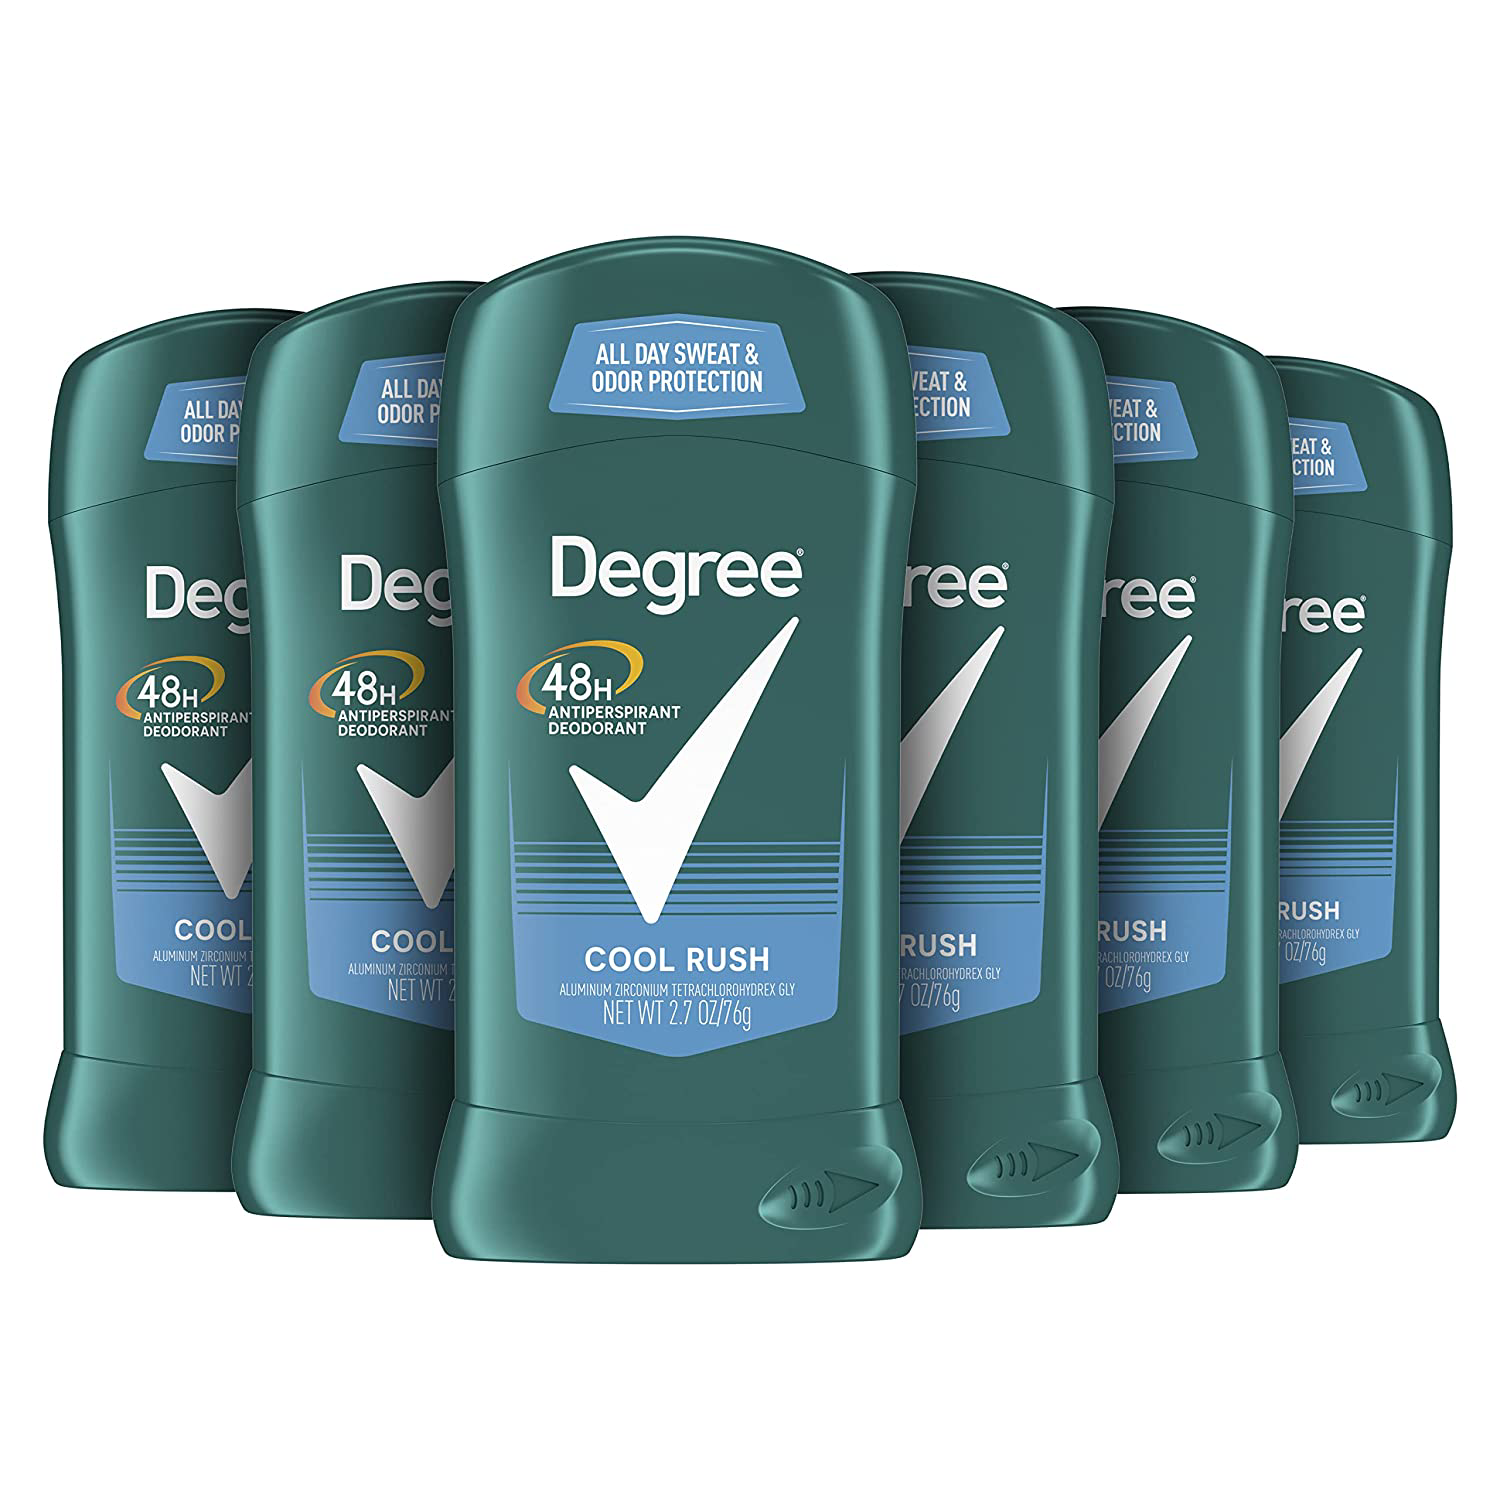 Degree Men Original Antiperspirant Deodorant 48-Hour Odor Protection Cool Rush Mens Deodorant Stick 2.7 oz, 6 Count $13.15 or less with S&S